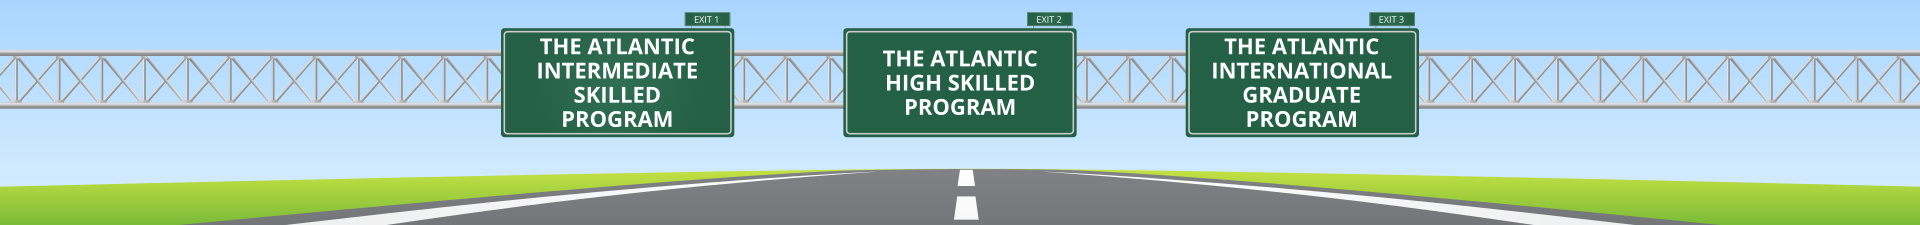 atlantic pilot programs navigation links presented as overhead highway signs